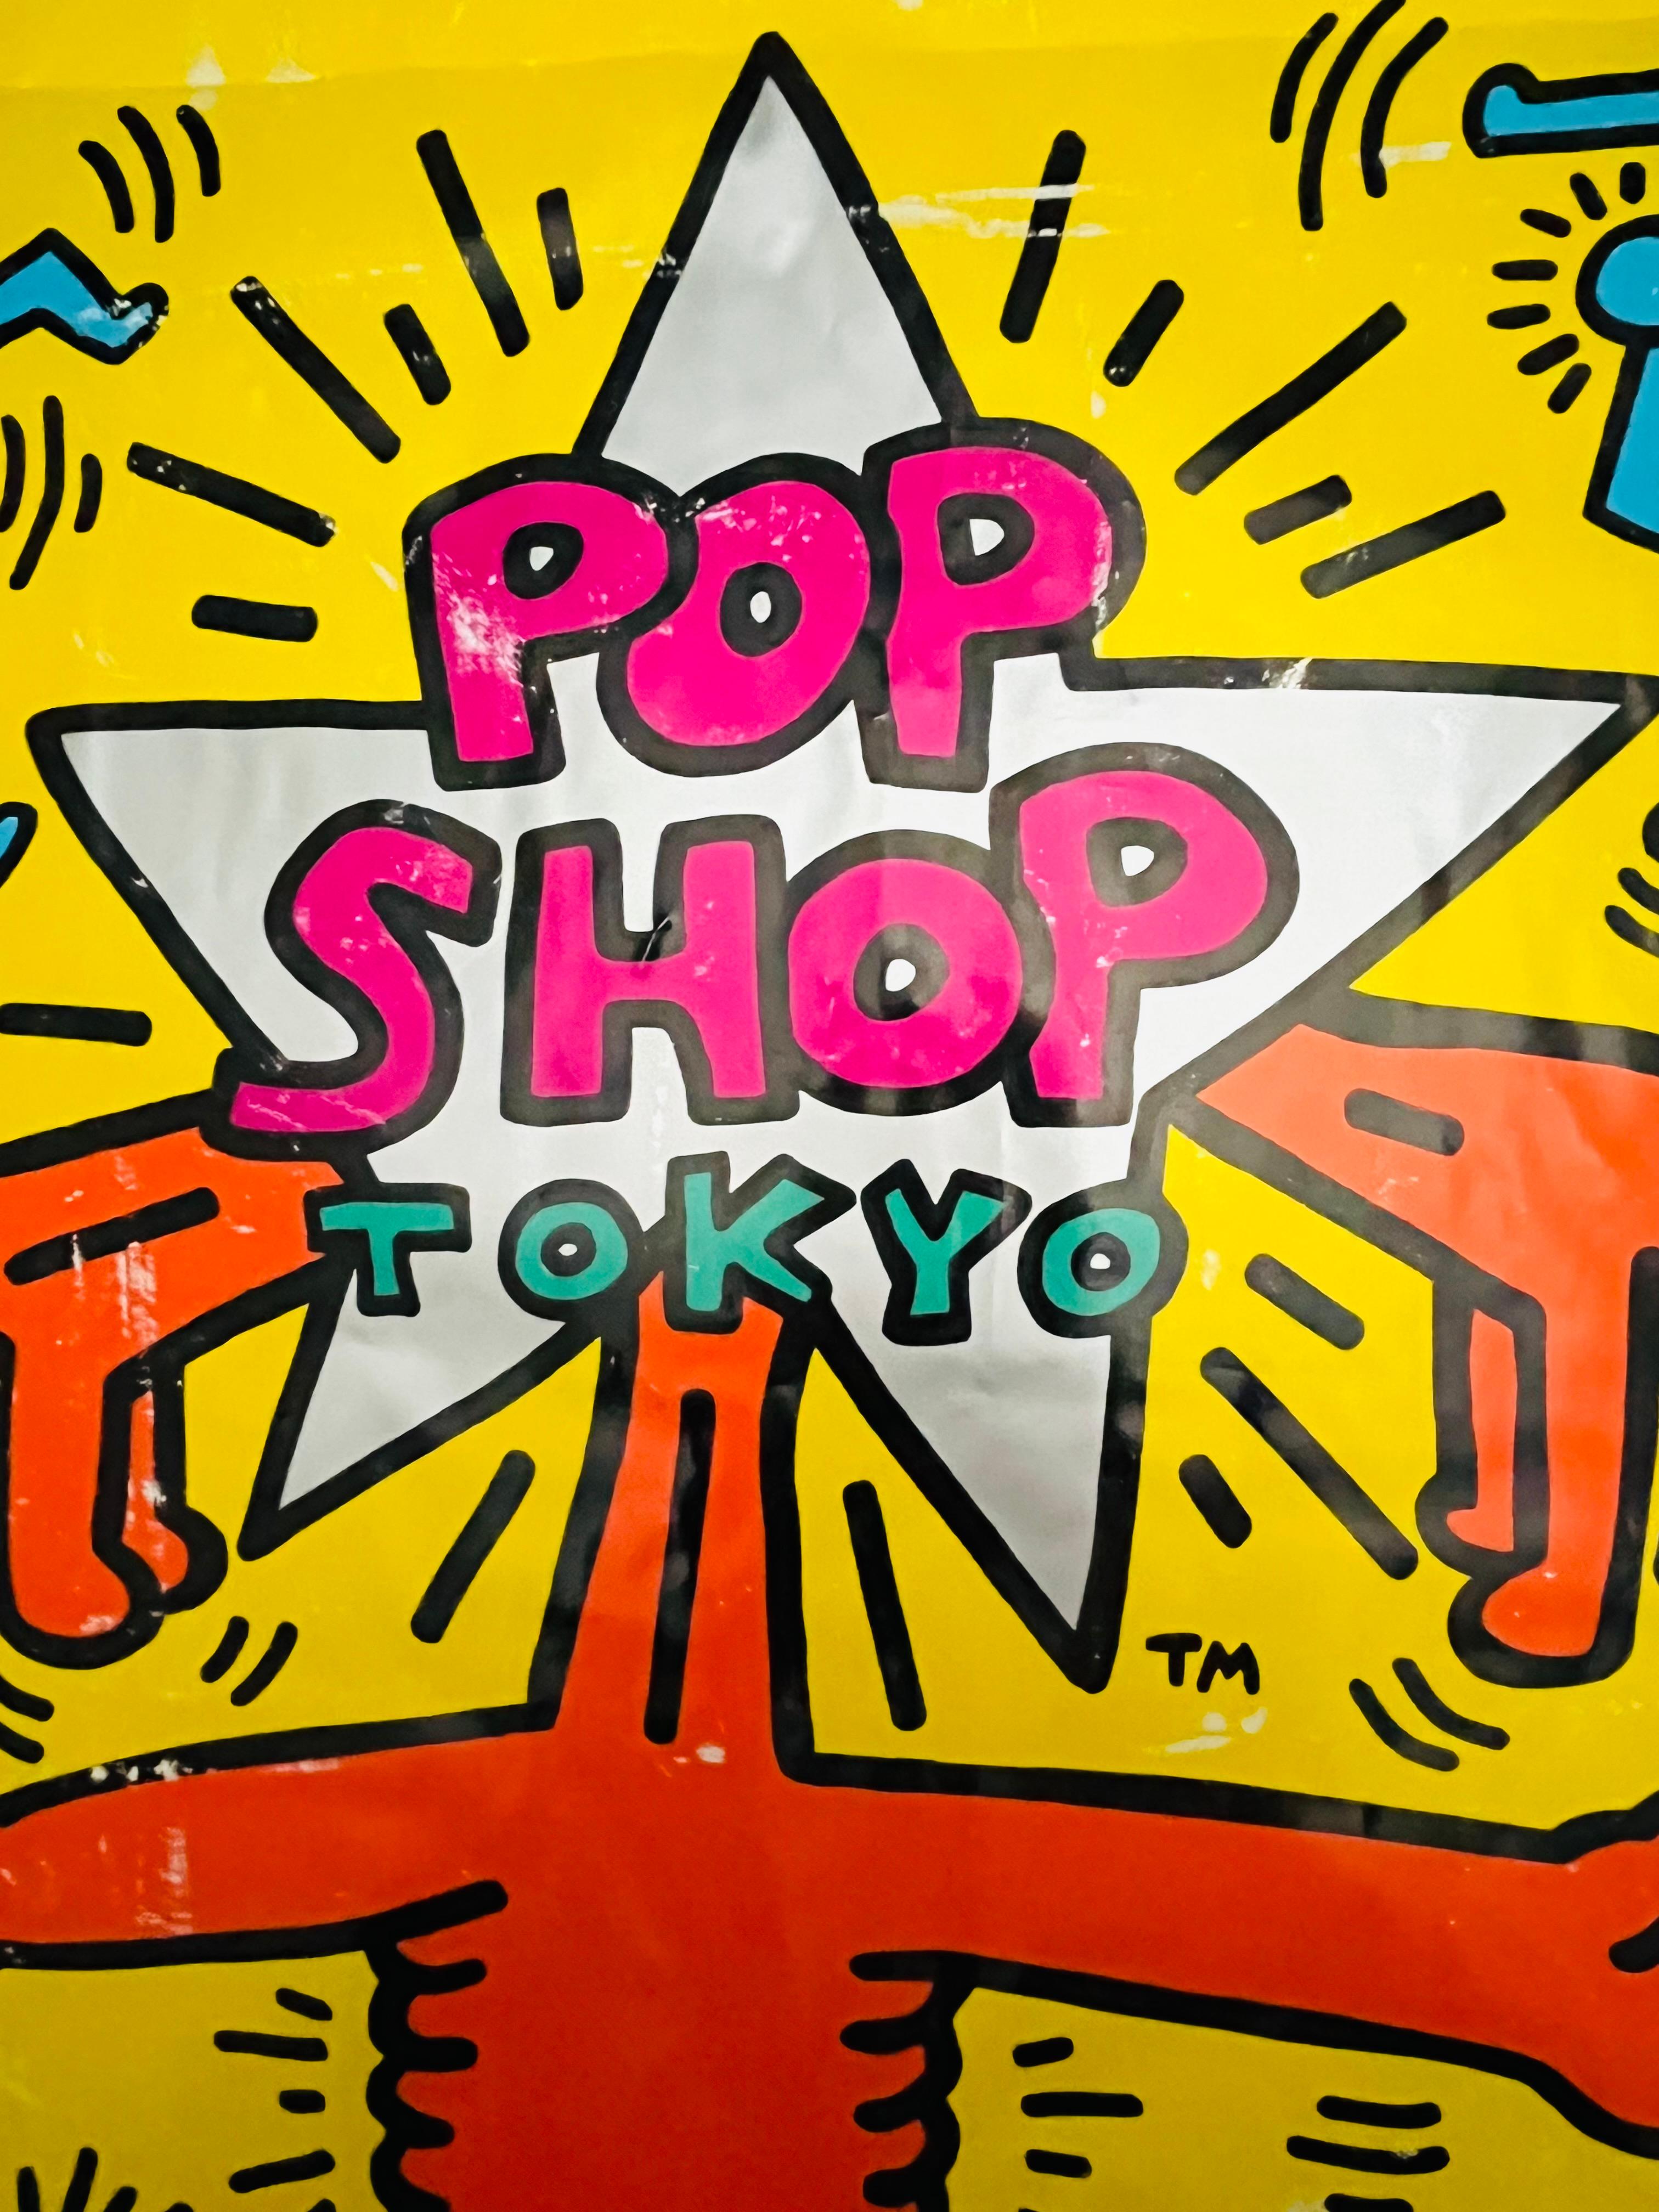 Original 1980s Keith Haring Pop Shop Tokyo bag (Keith Haring pop shop New York) For Sale 4